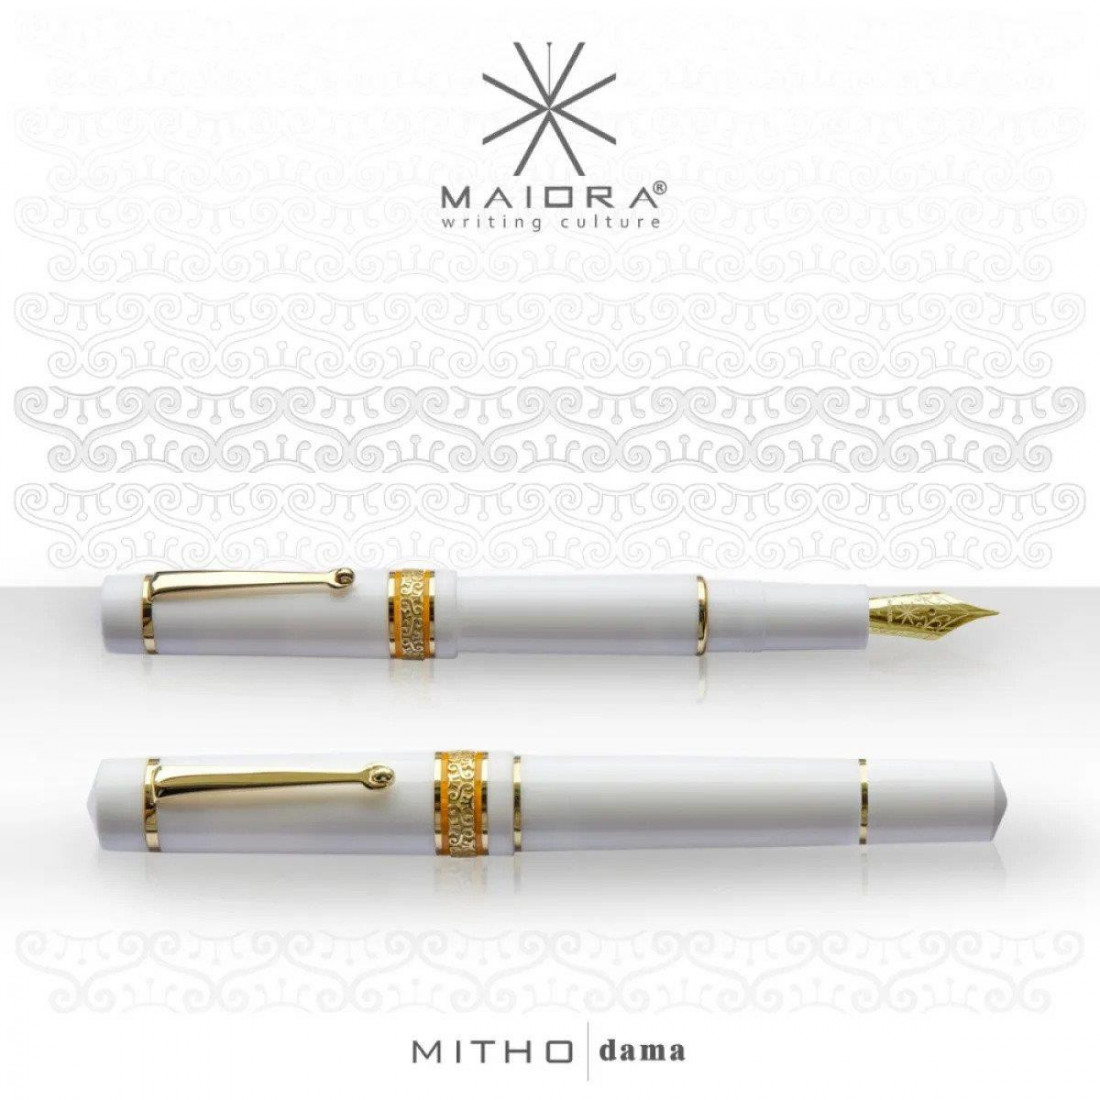 Maiora Mitho Dama GT ivoire steel nib limited edition fountain pen